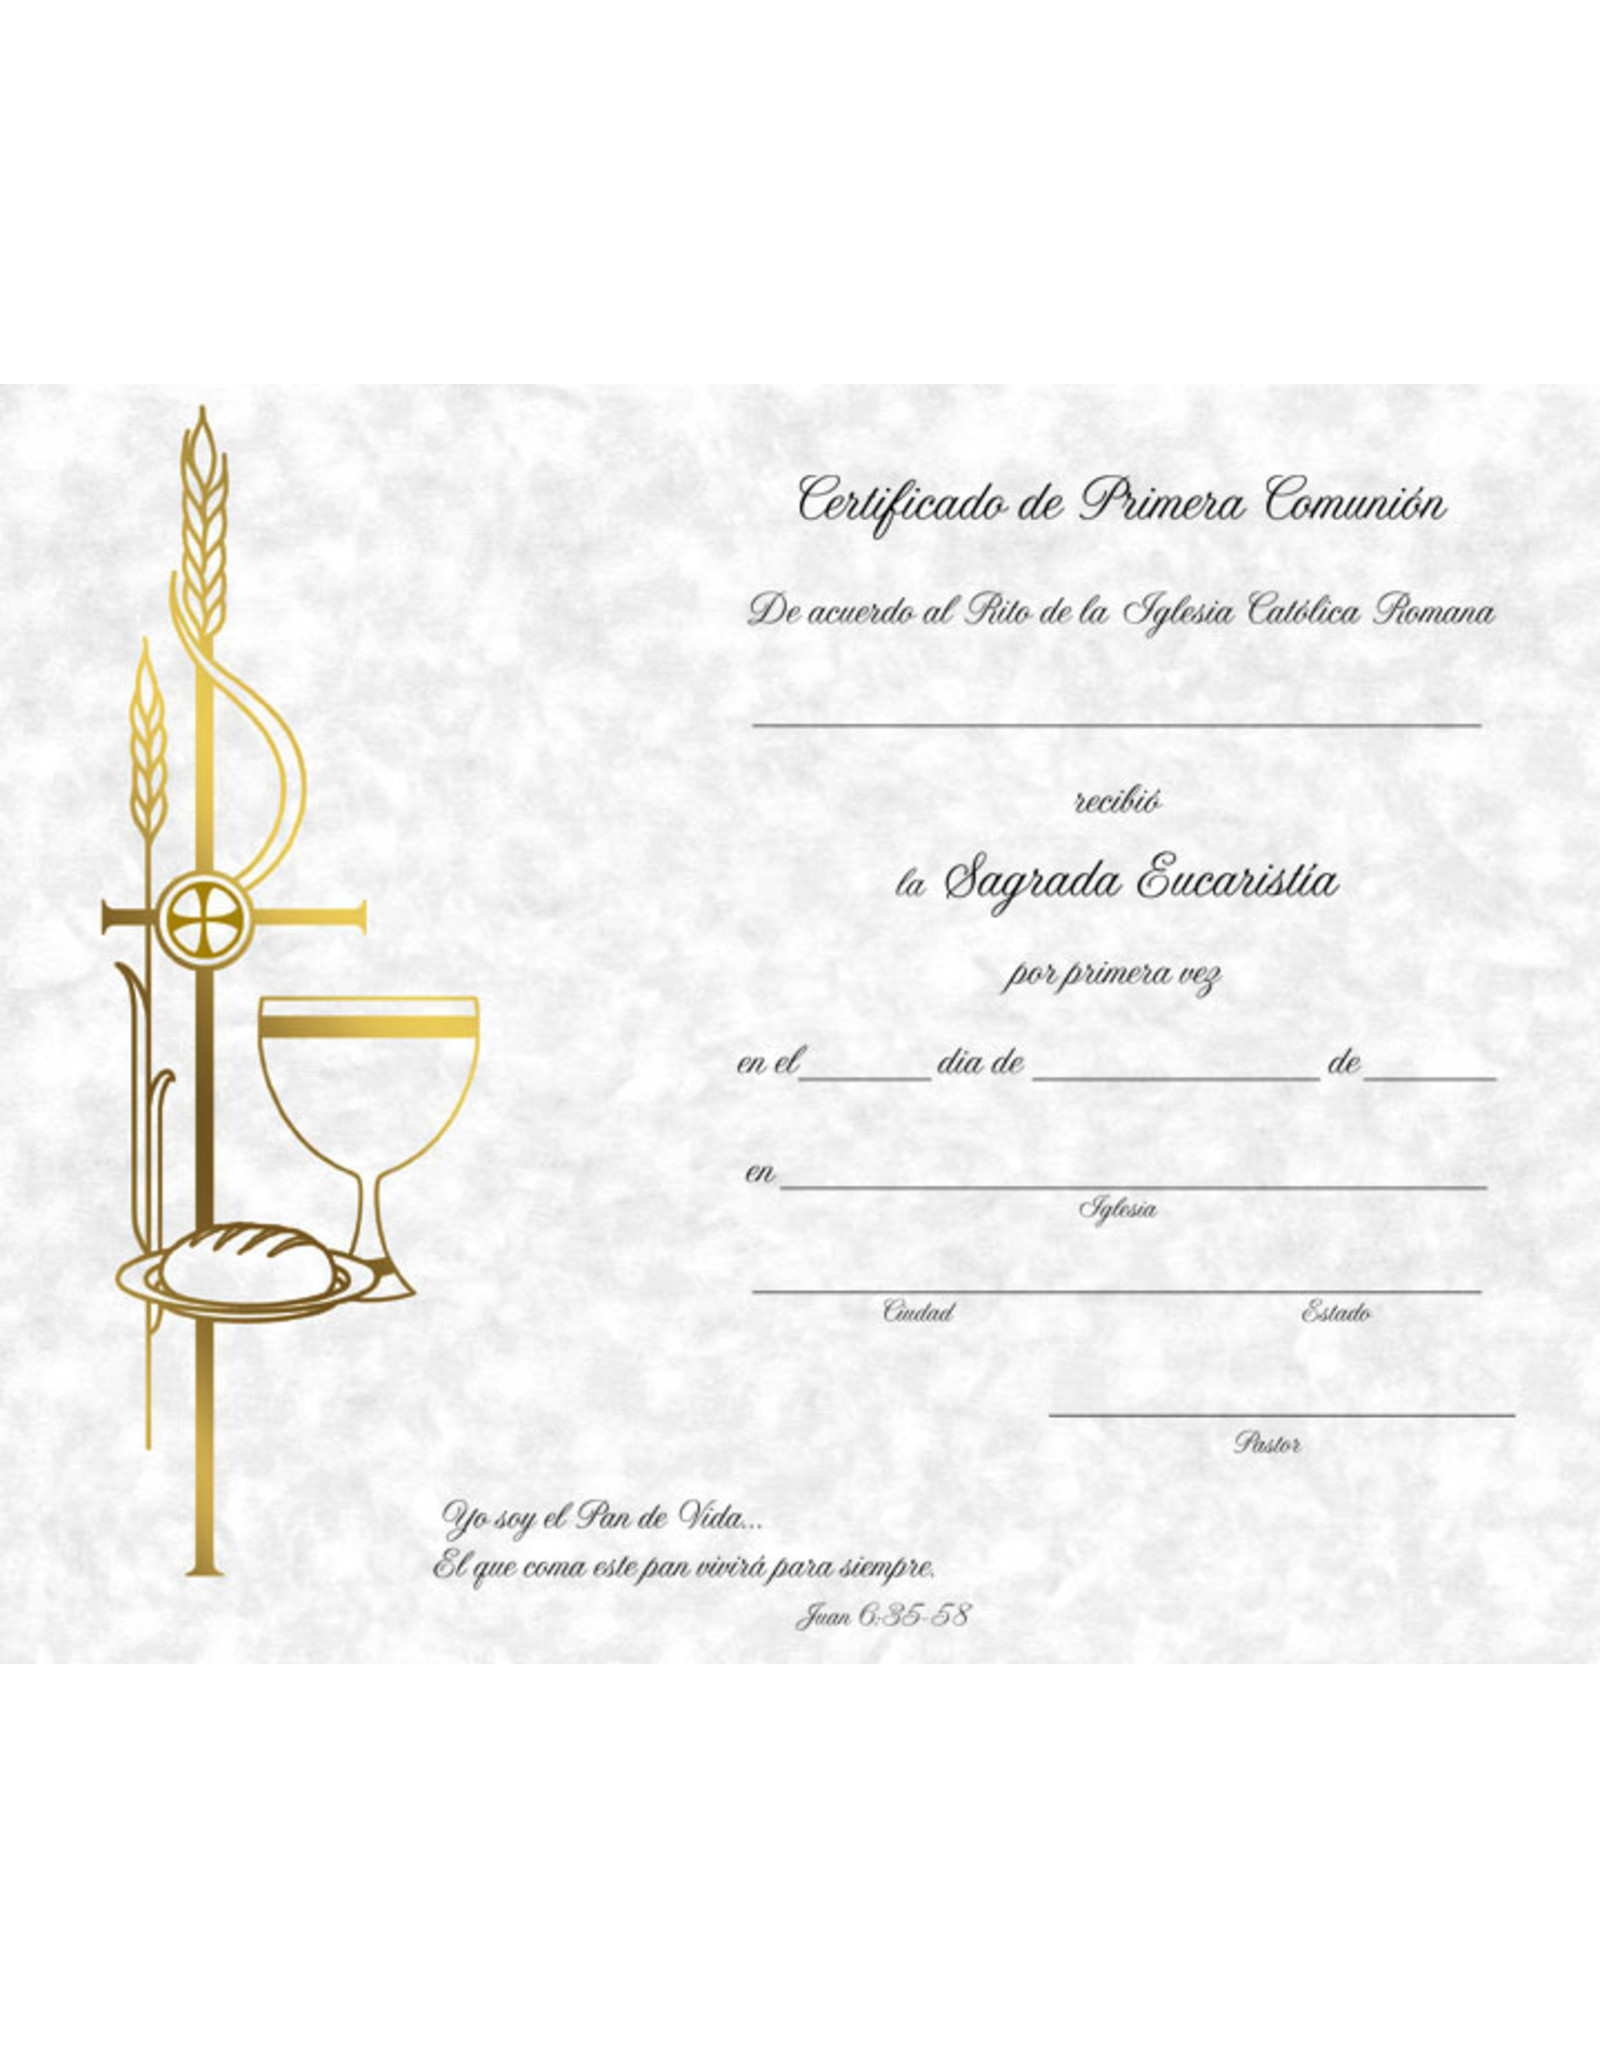 Certificates - First Communion, Spanish (50)